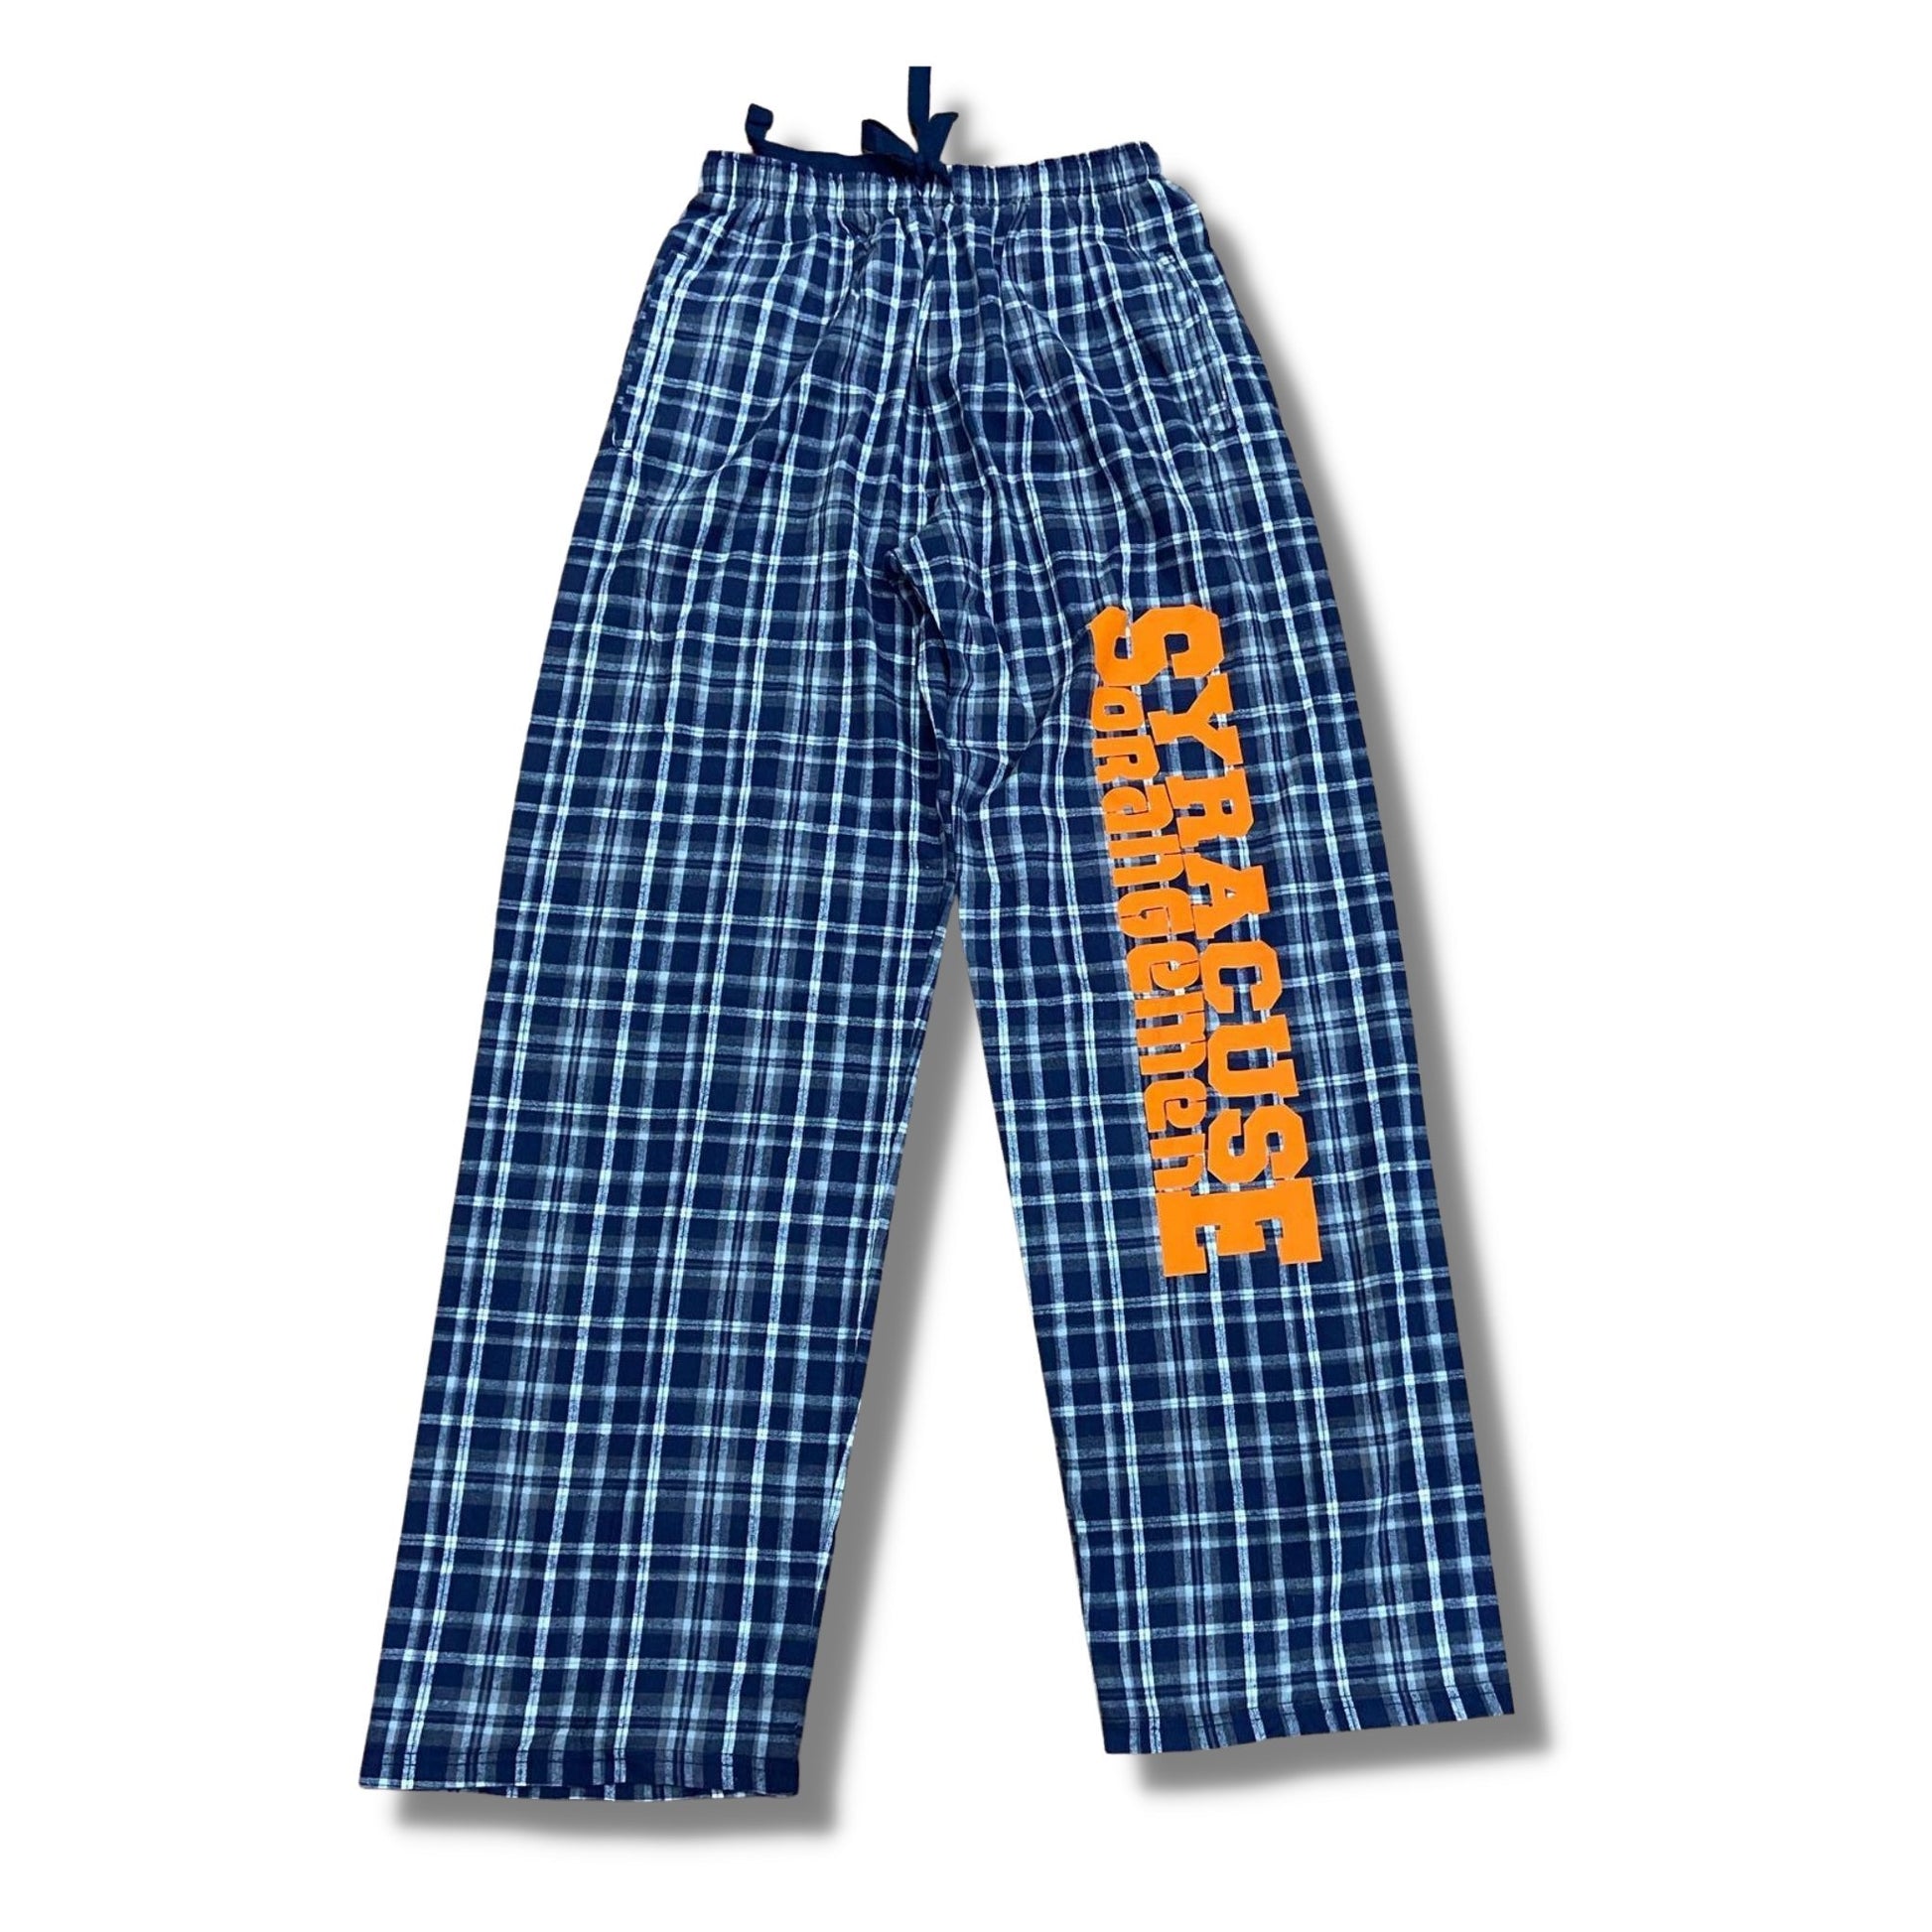 Truly Whimsical Flannel Lounge Pants - a Spirit Animal - Pants $60-$75 Camp lounge pants